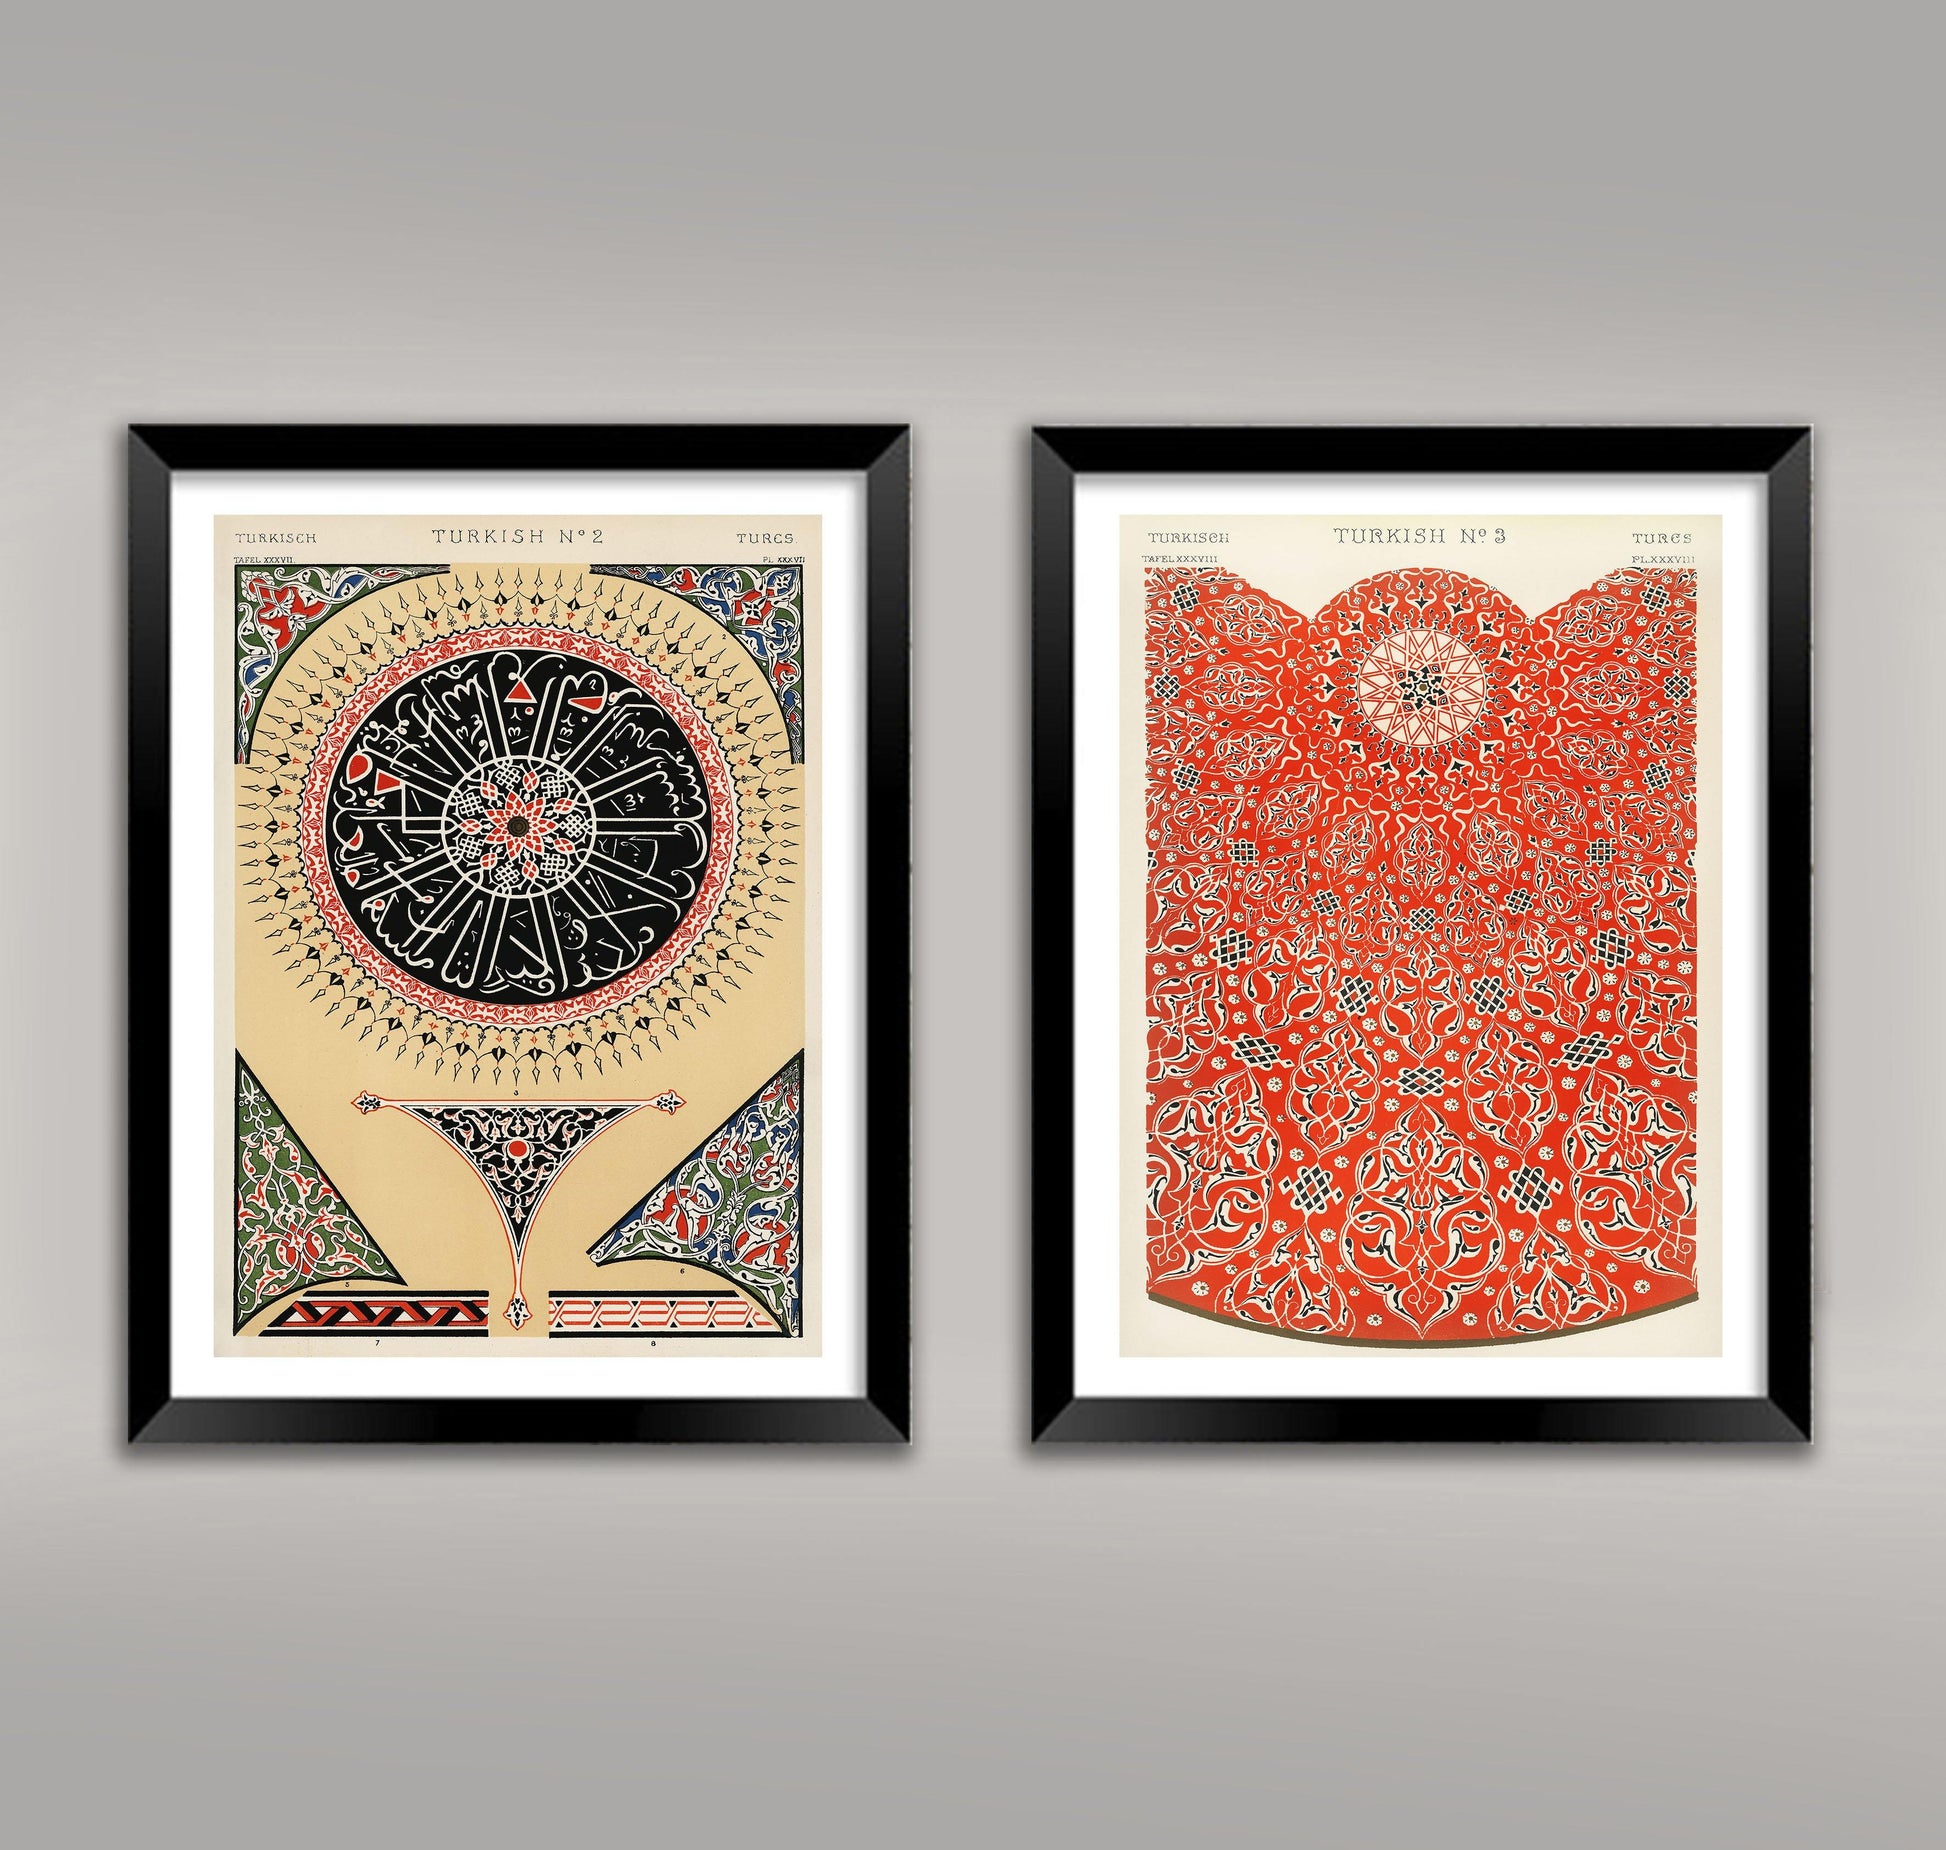 TURKISH DESIGN PRINTS: Vintage Graphic Design Art, by Owen Jones - Pimlico Prints